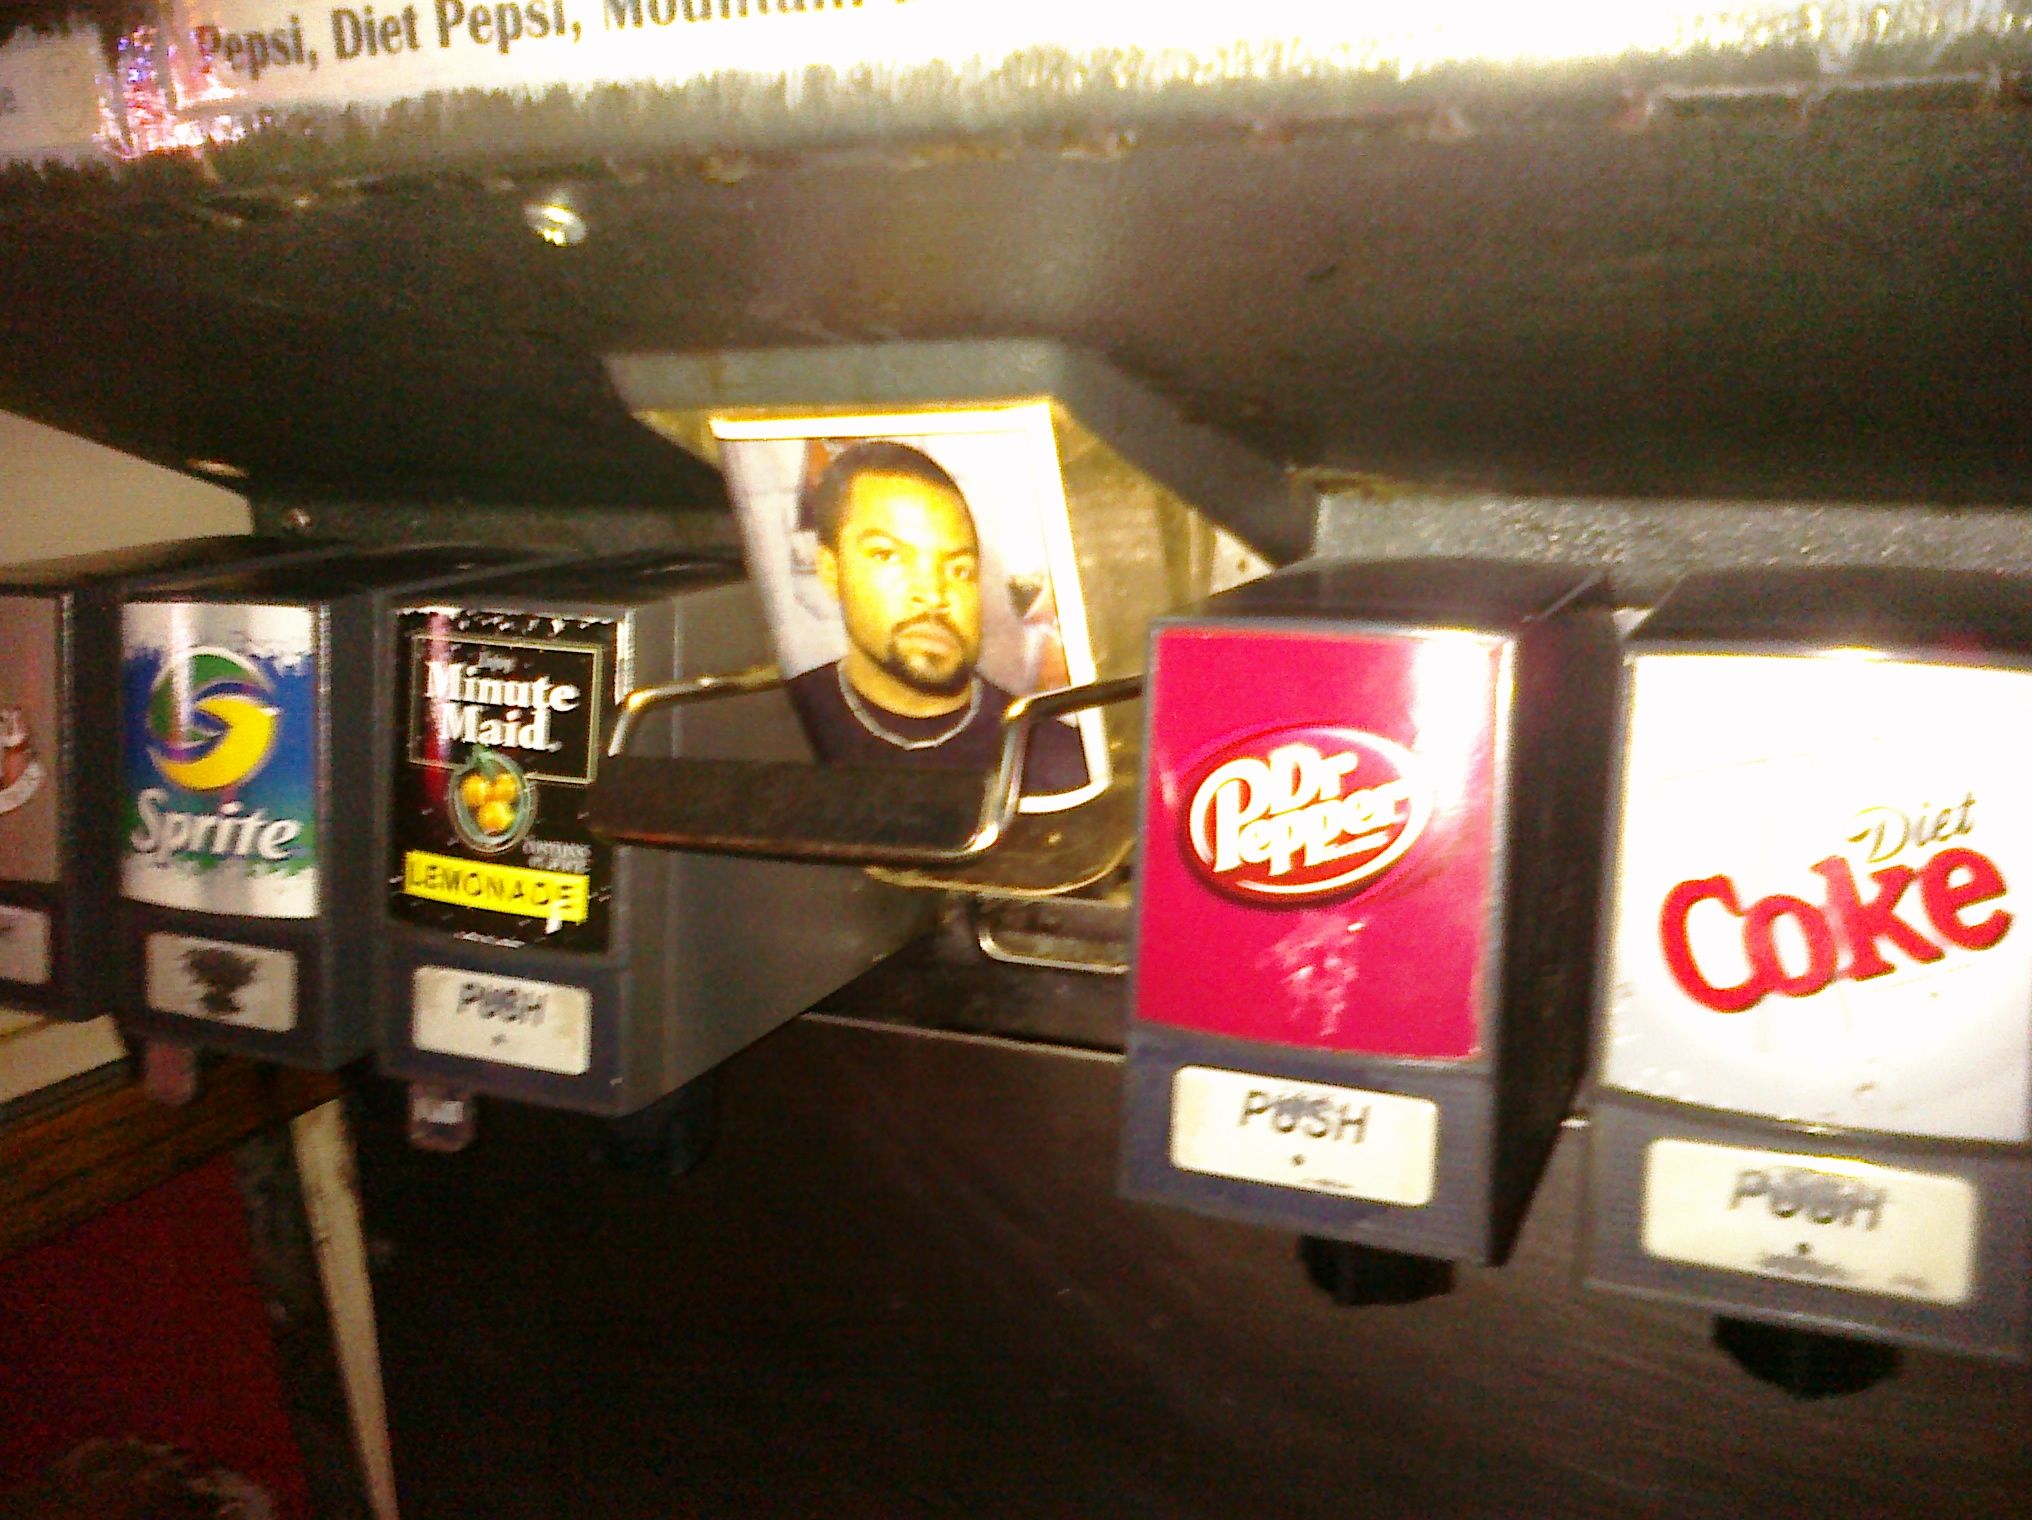 Ice Cube - the dispenser